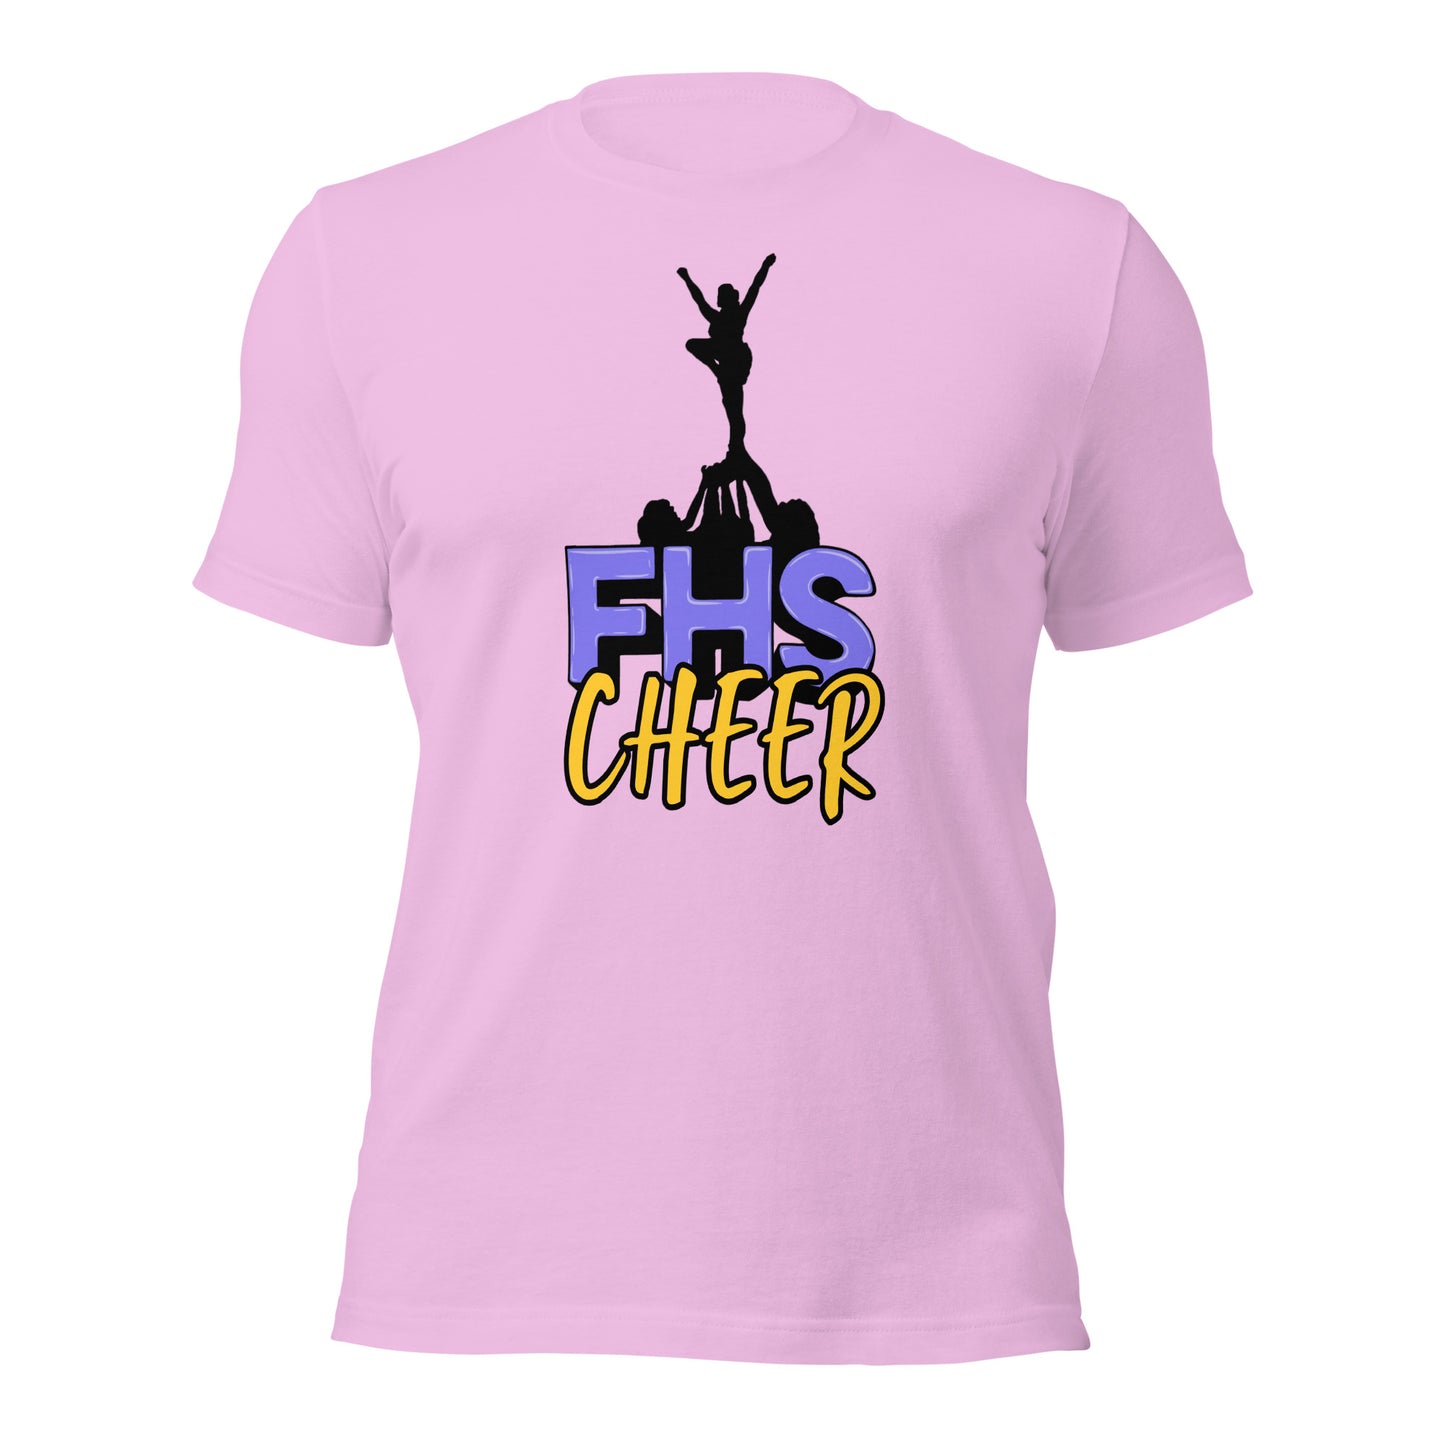 FHS CHEER (Unisex t-shirt)